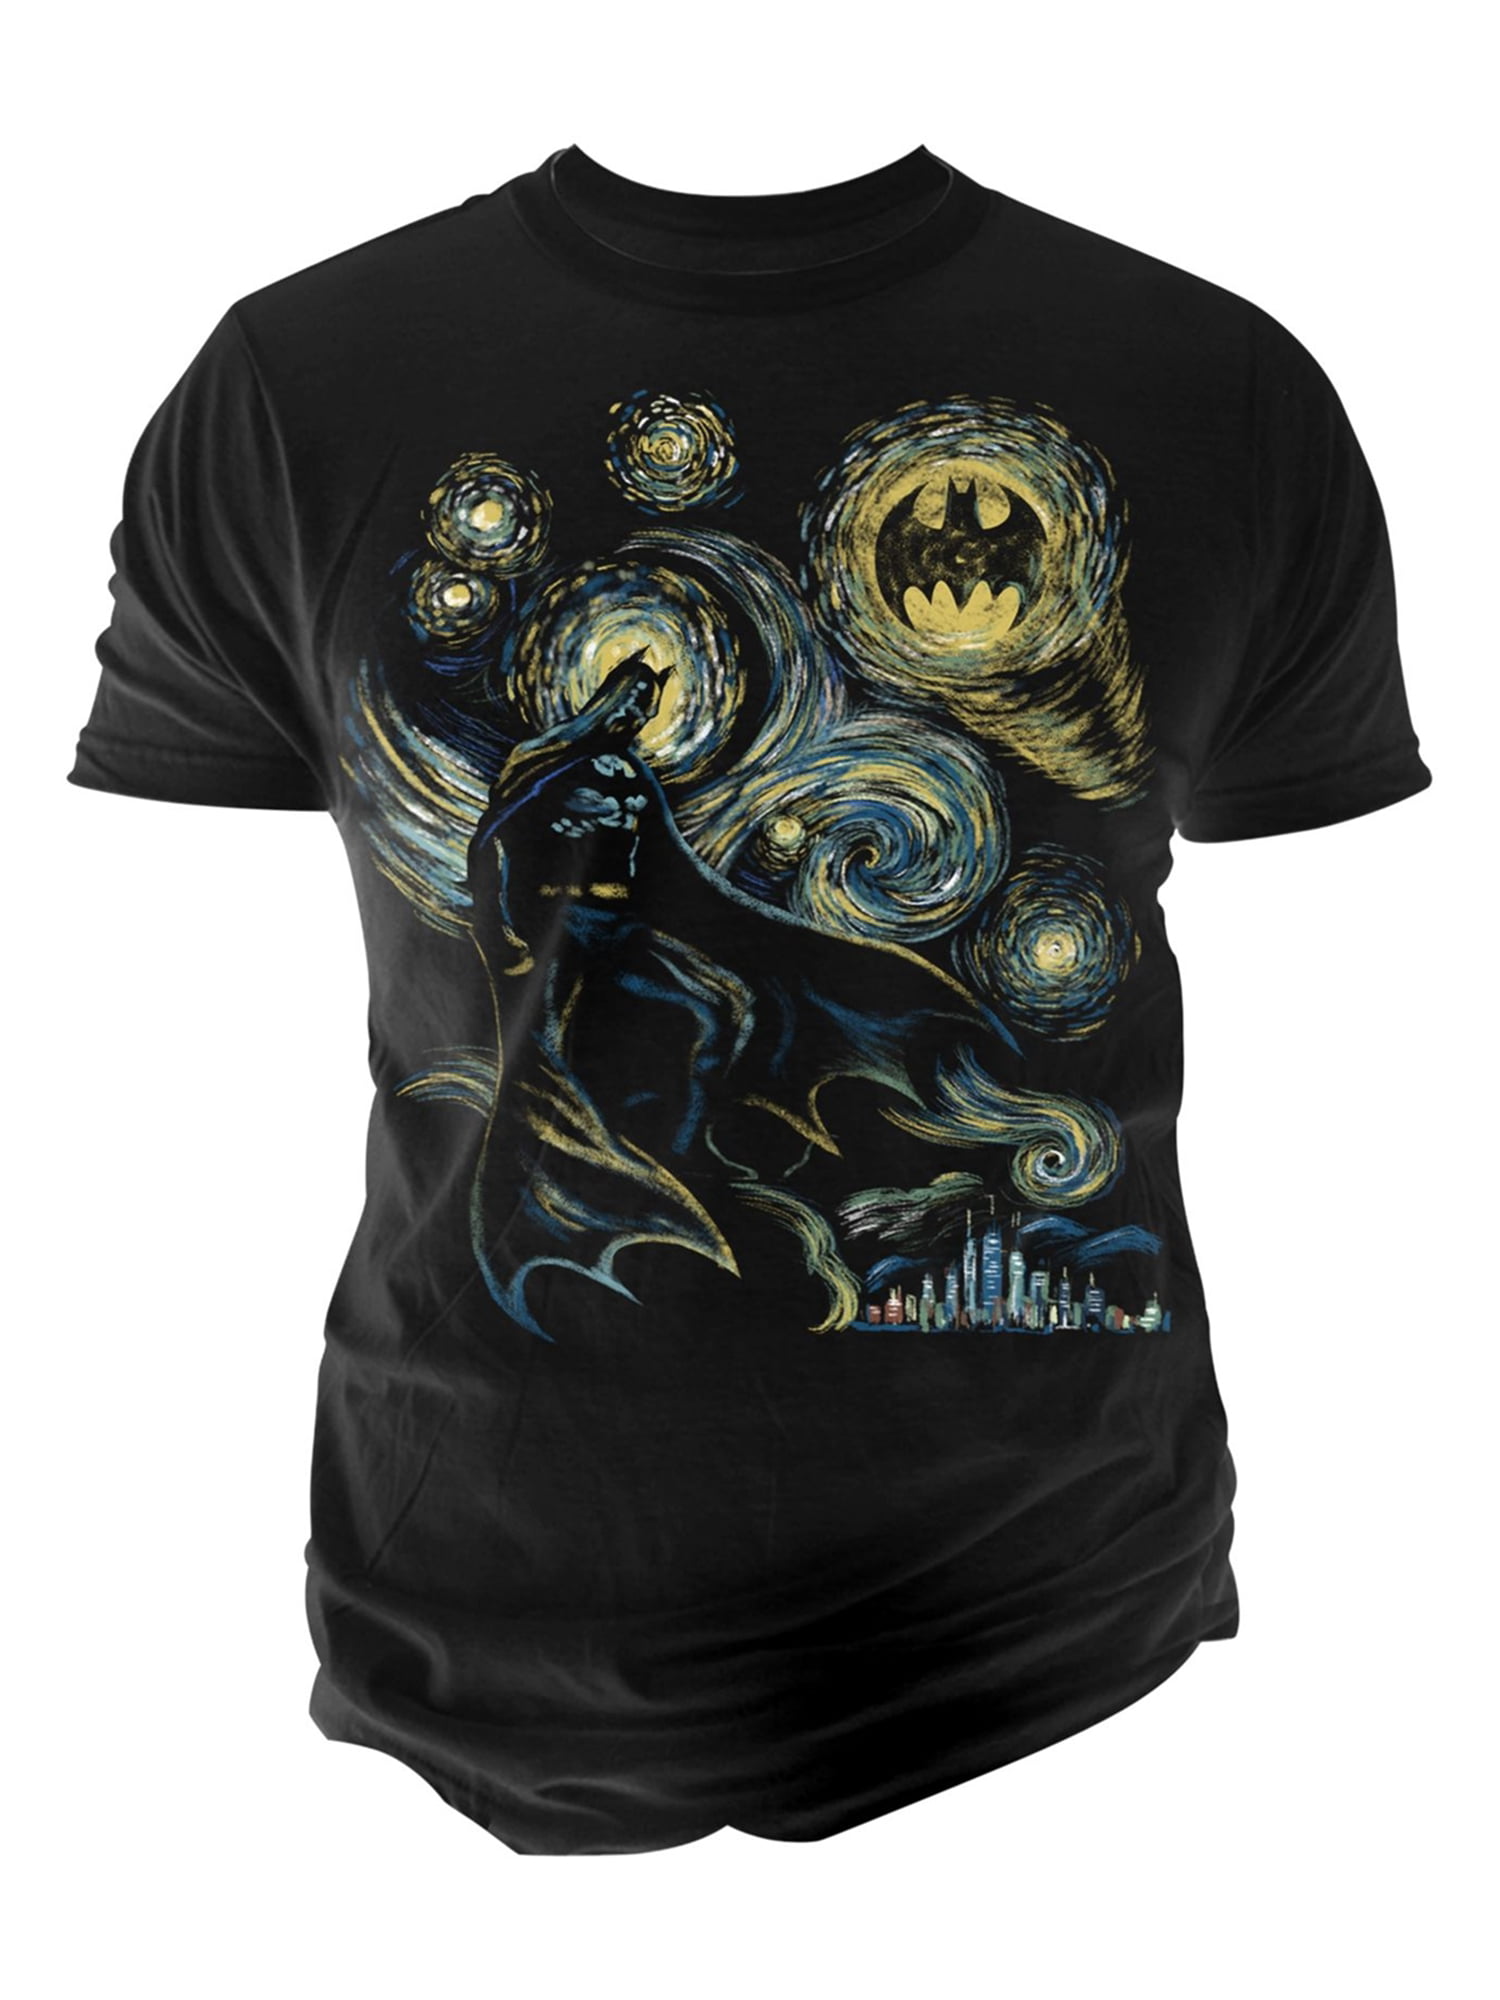 batman graphic t shirt